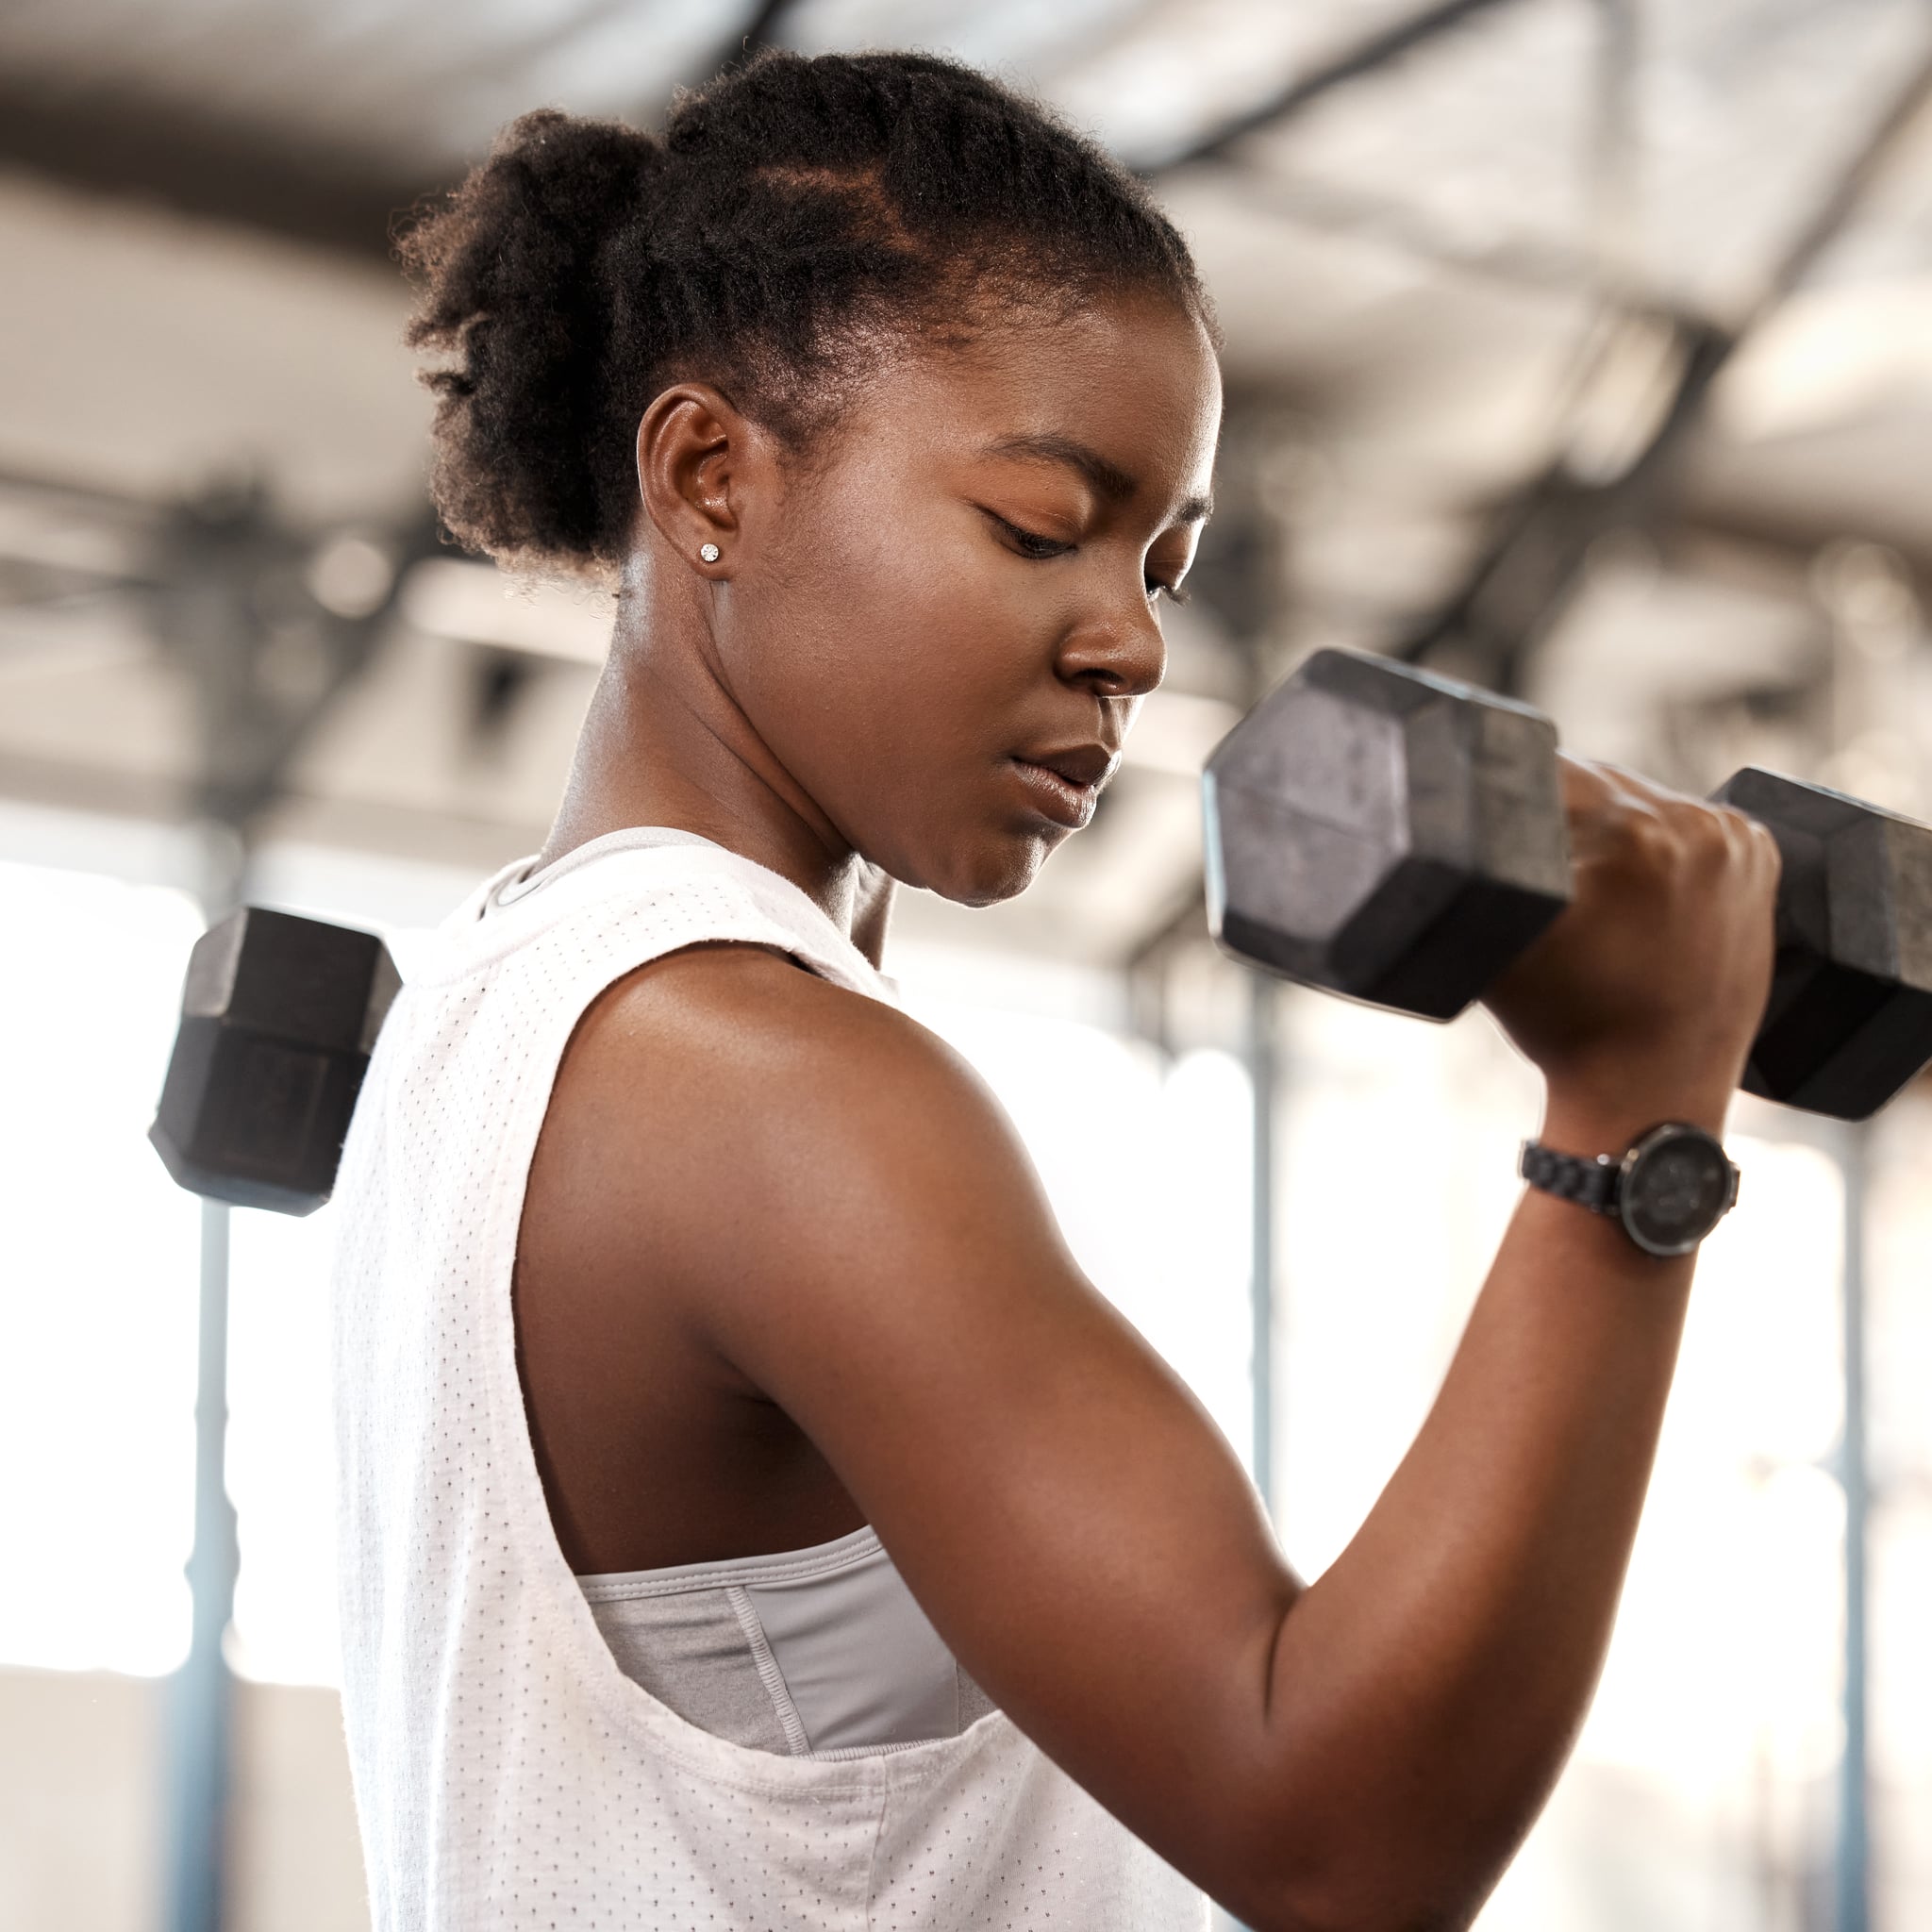 Hangen Stevenson Machtigen Weekly Workout Plan For Women | POPSUGAR Fitness